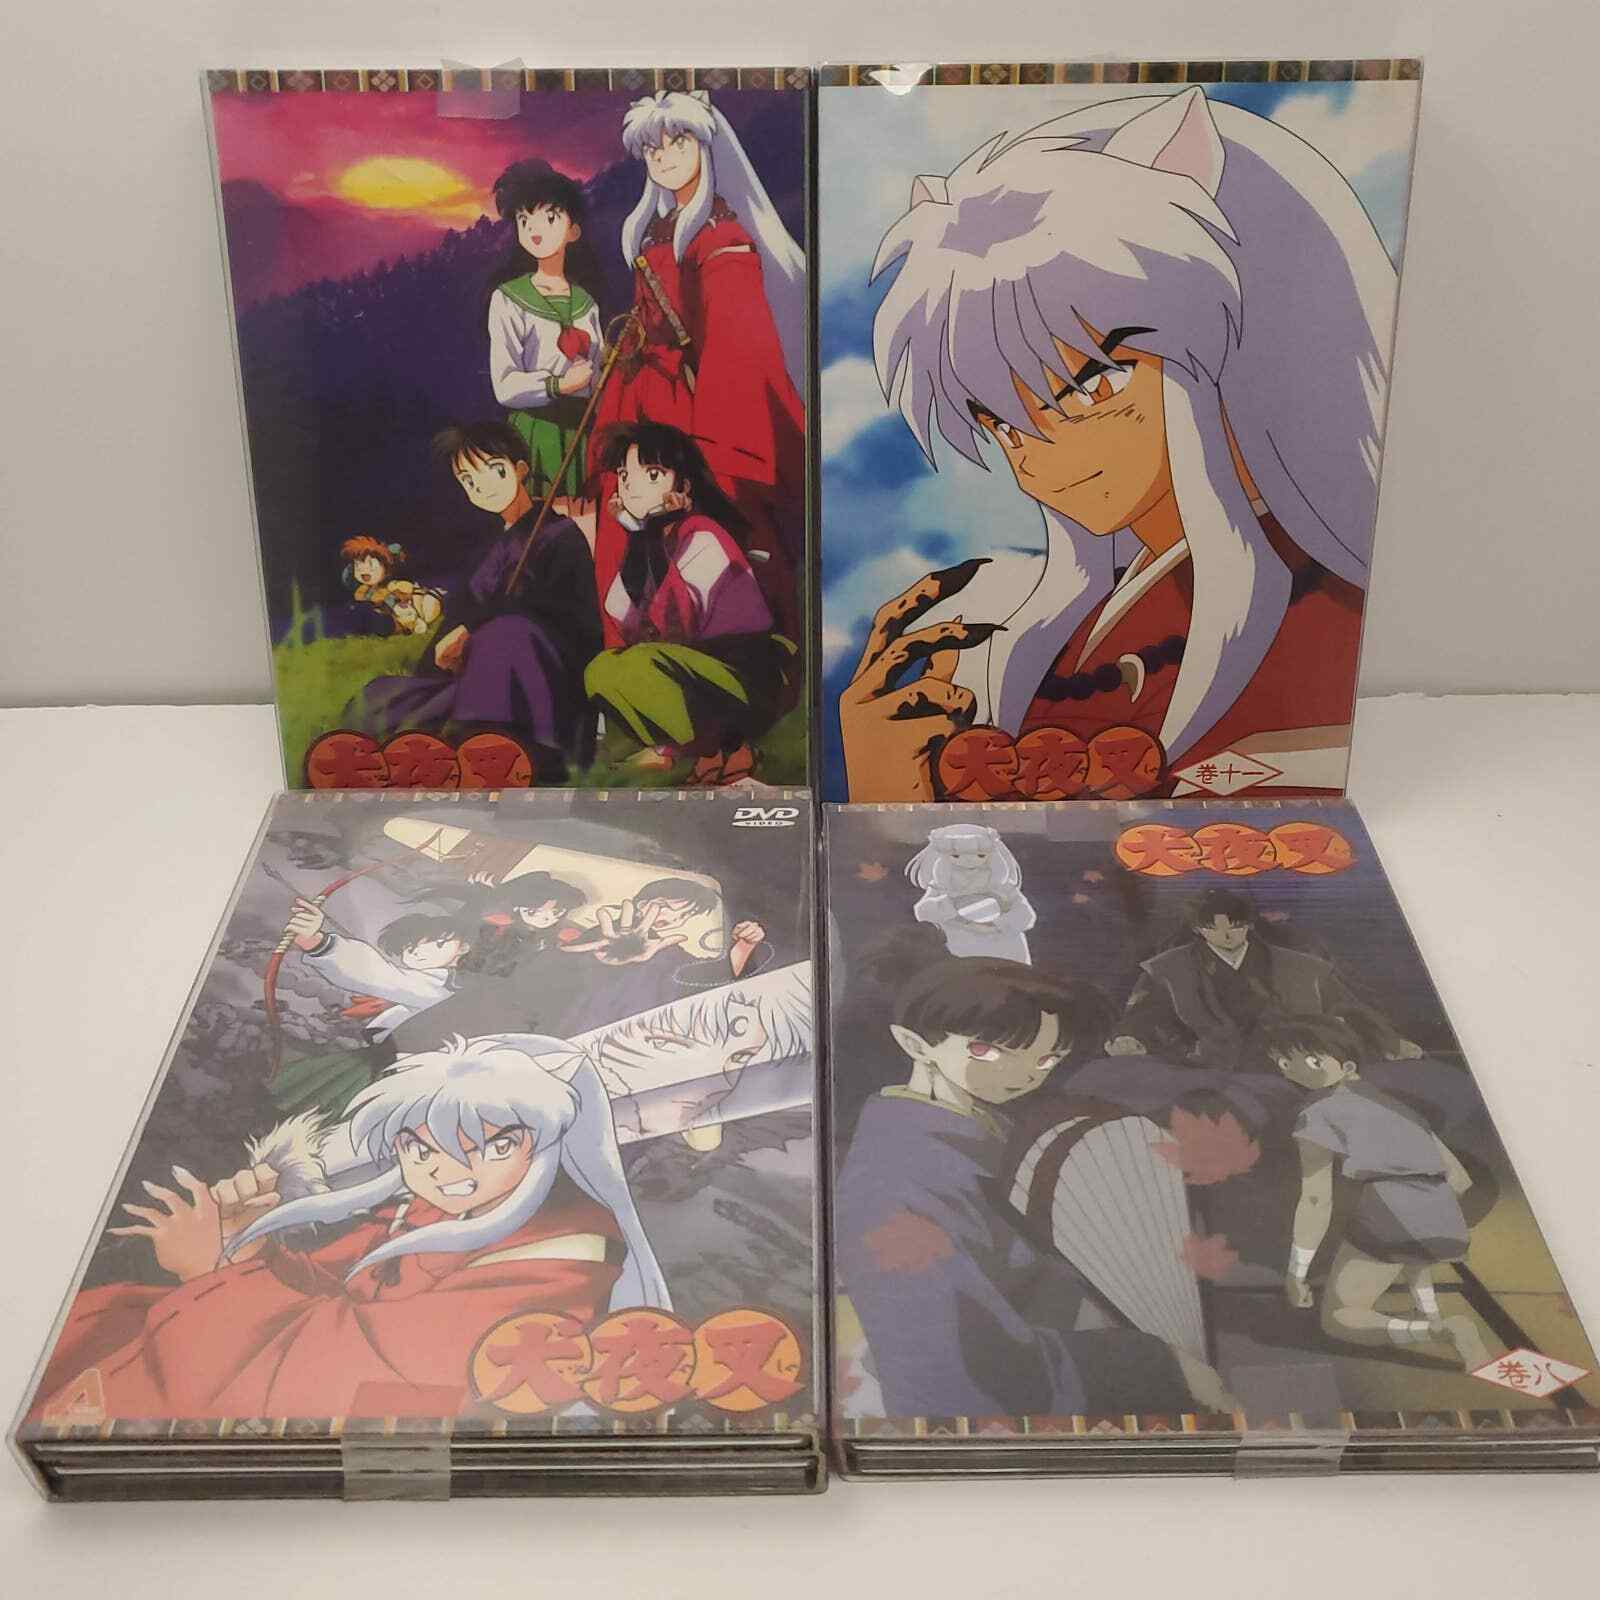 Inuyasha Anime Original Japanese Dvd Box Sets Lot Of 4